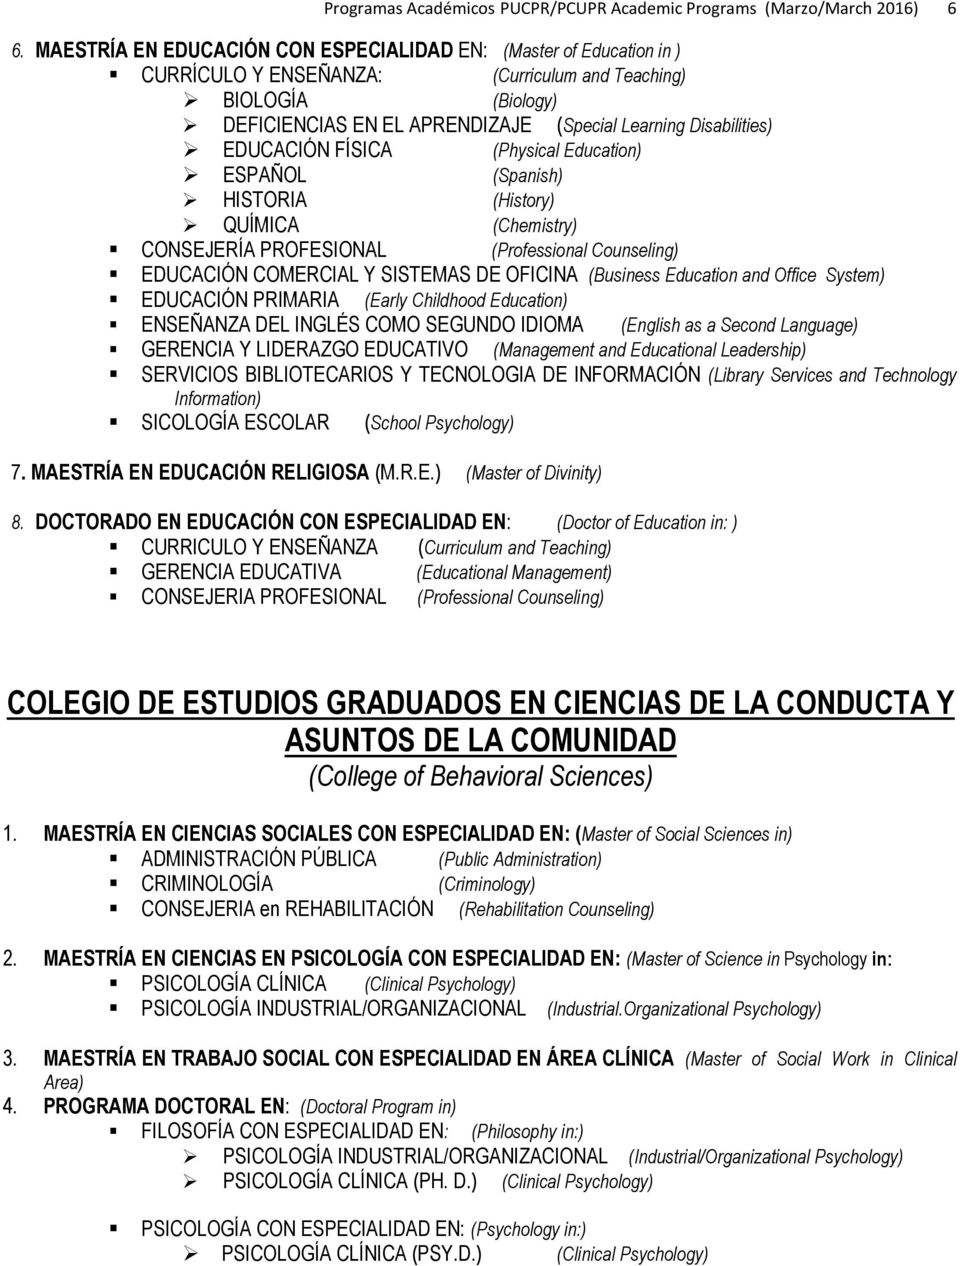 EDUCACIÓN FÍSICA (Physical Education) ESPAÑOL (Spanish) HISTORIA (History) QUÍMICA (Chemistry) CONSEJERÍA PROFESIONAL (Professional Counseling) EDUCACIÓN COMERCIAL Y SISTEMAS DE OFICINA (Business